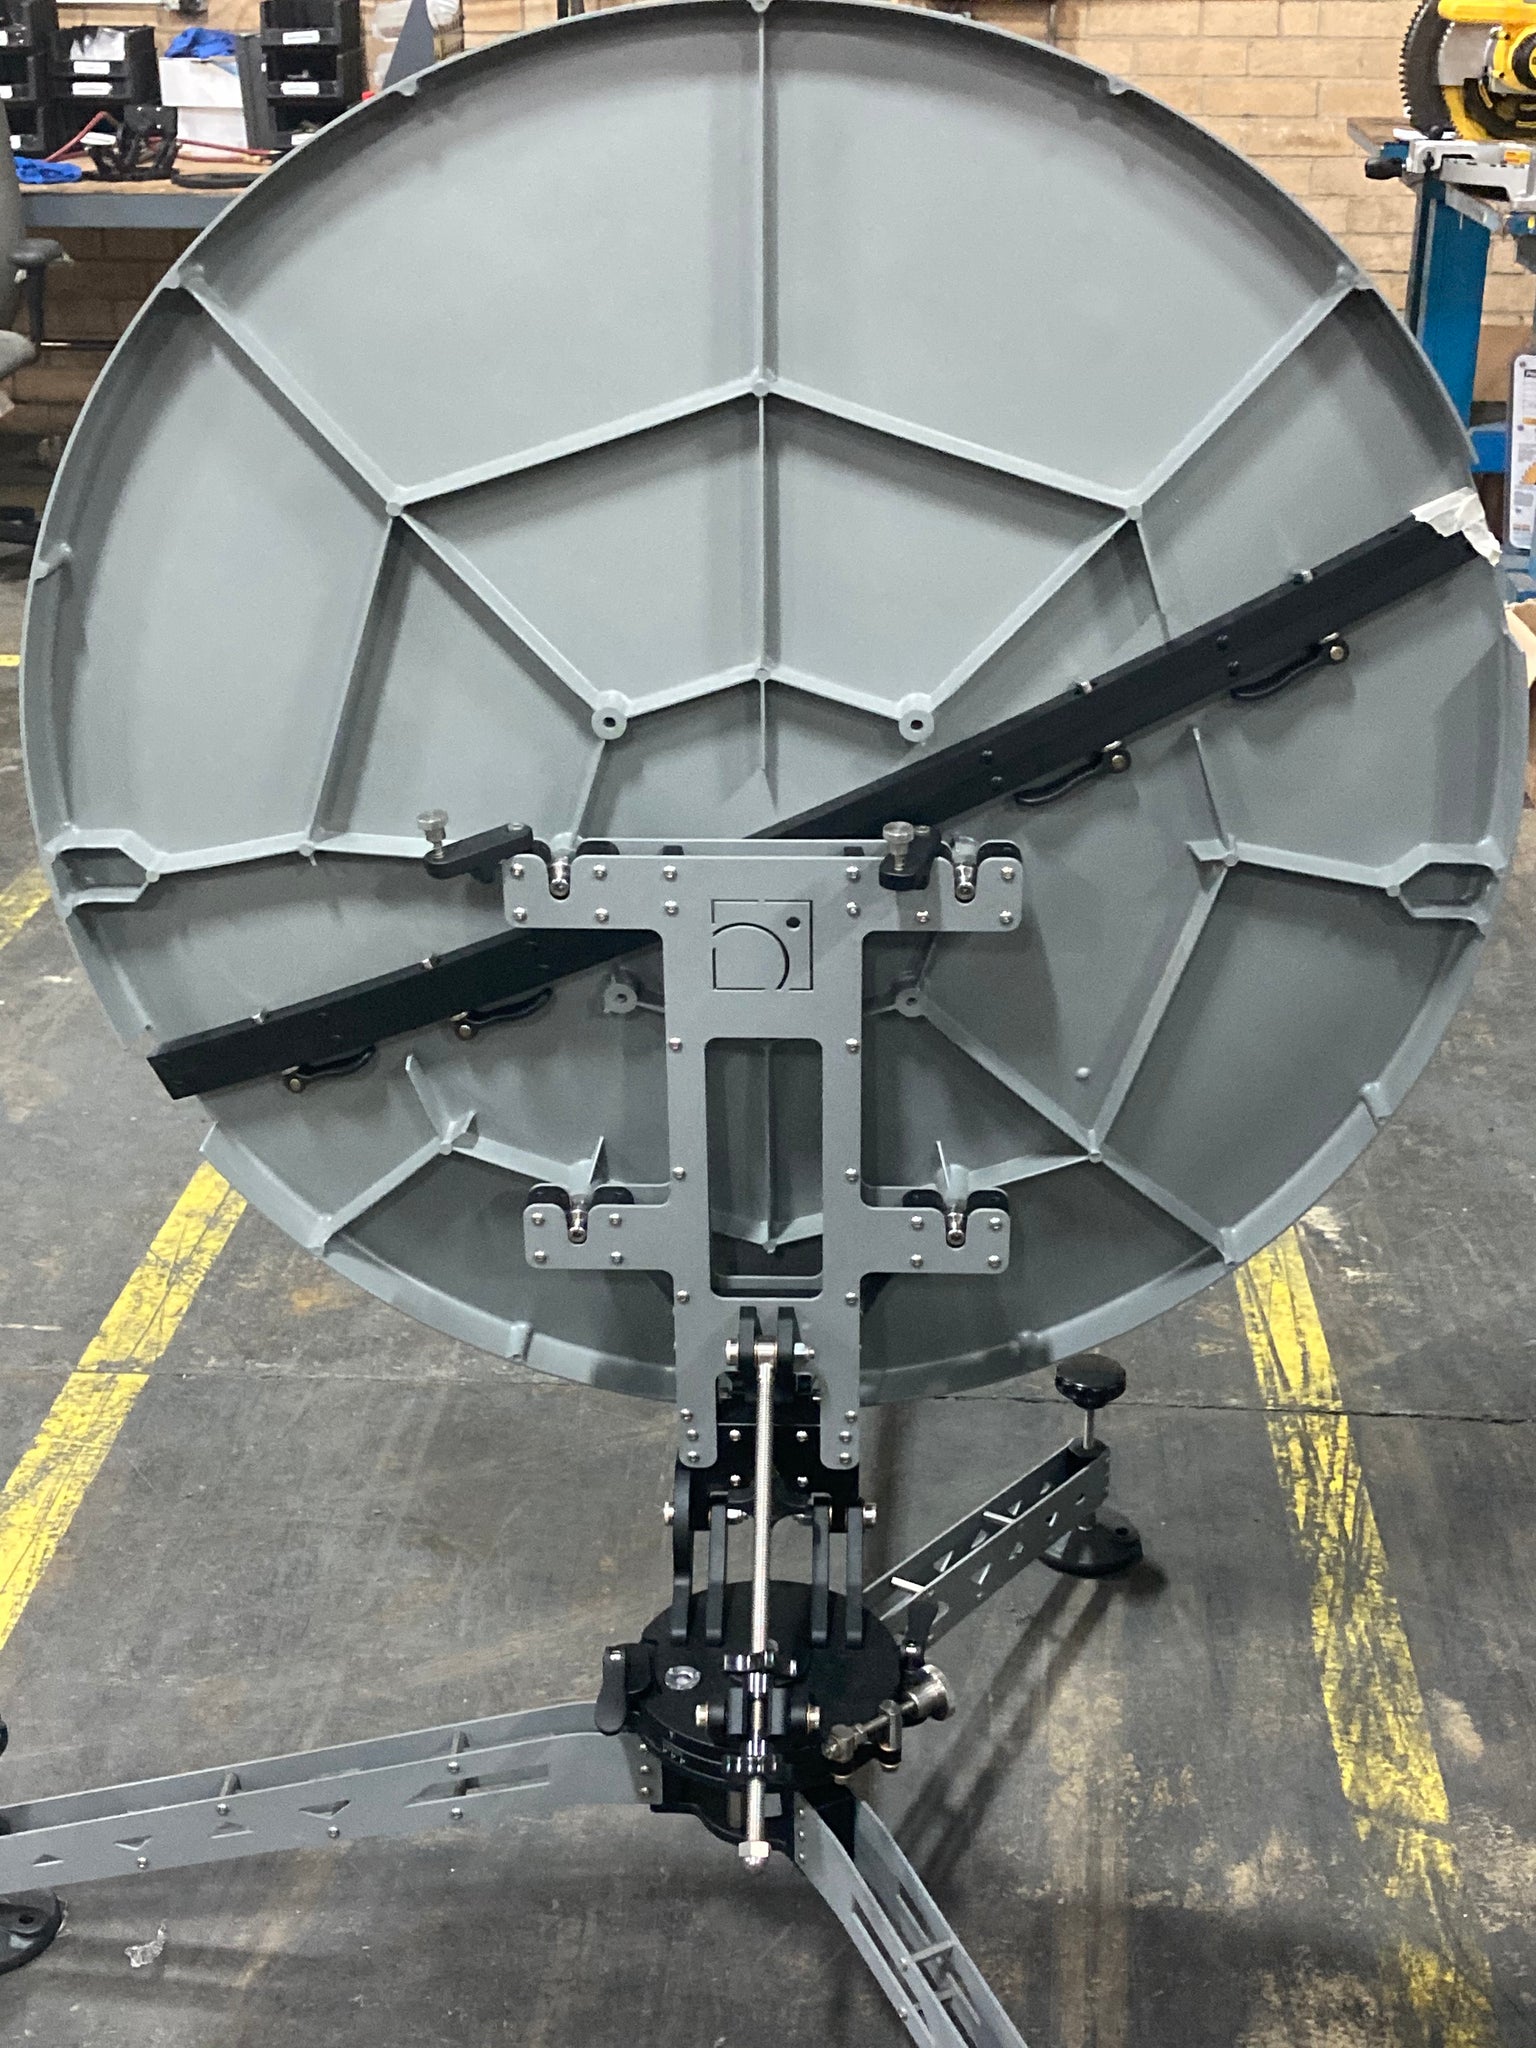 98cm antenna rear view